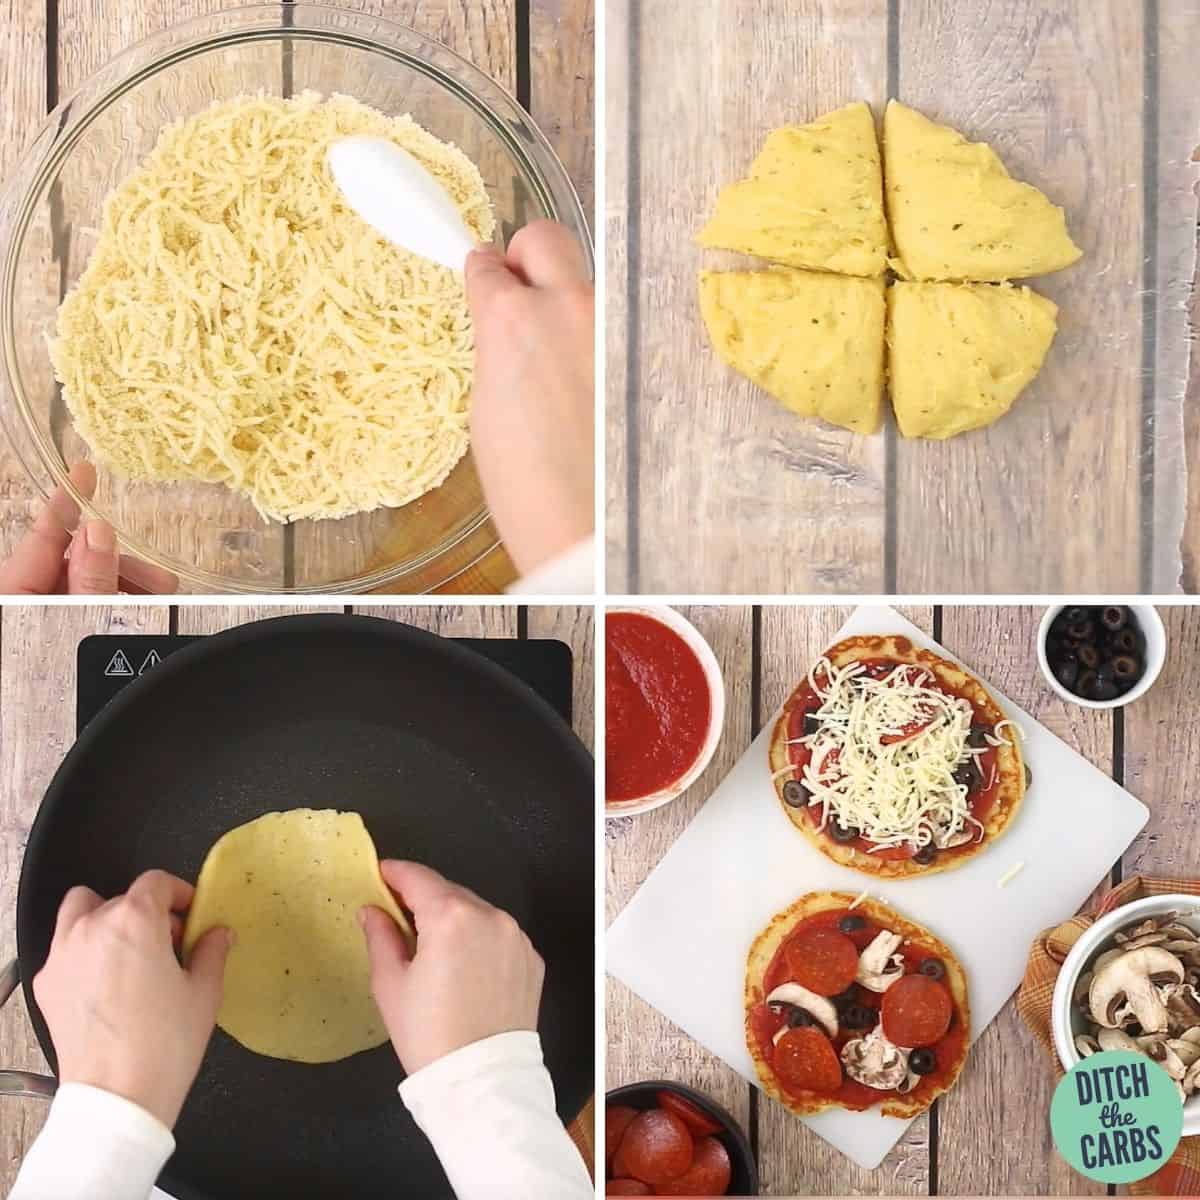 Mini Keto Pizza Chaffles (FREE Cookbook) - Thinlicious